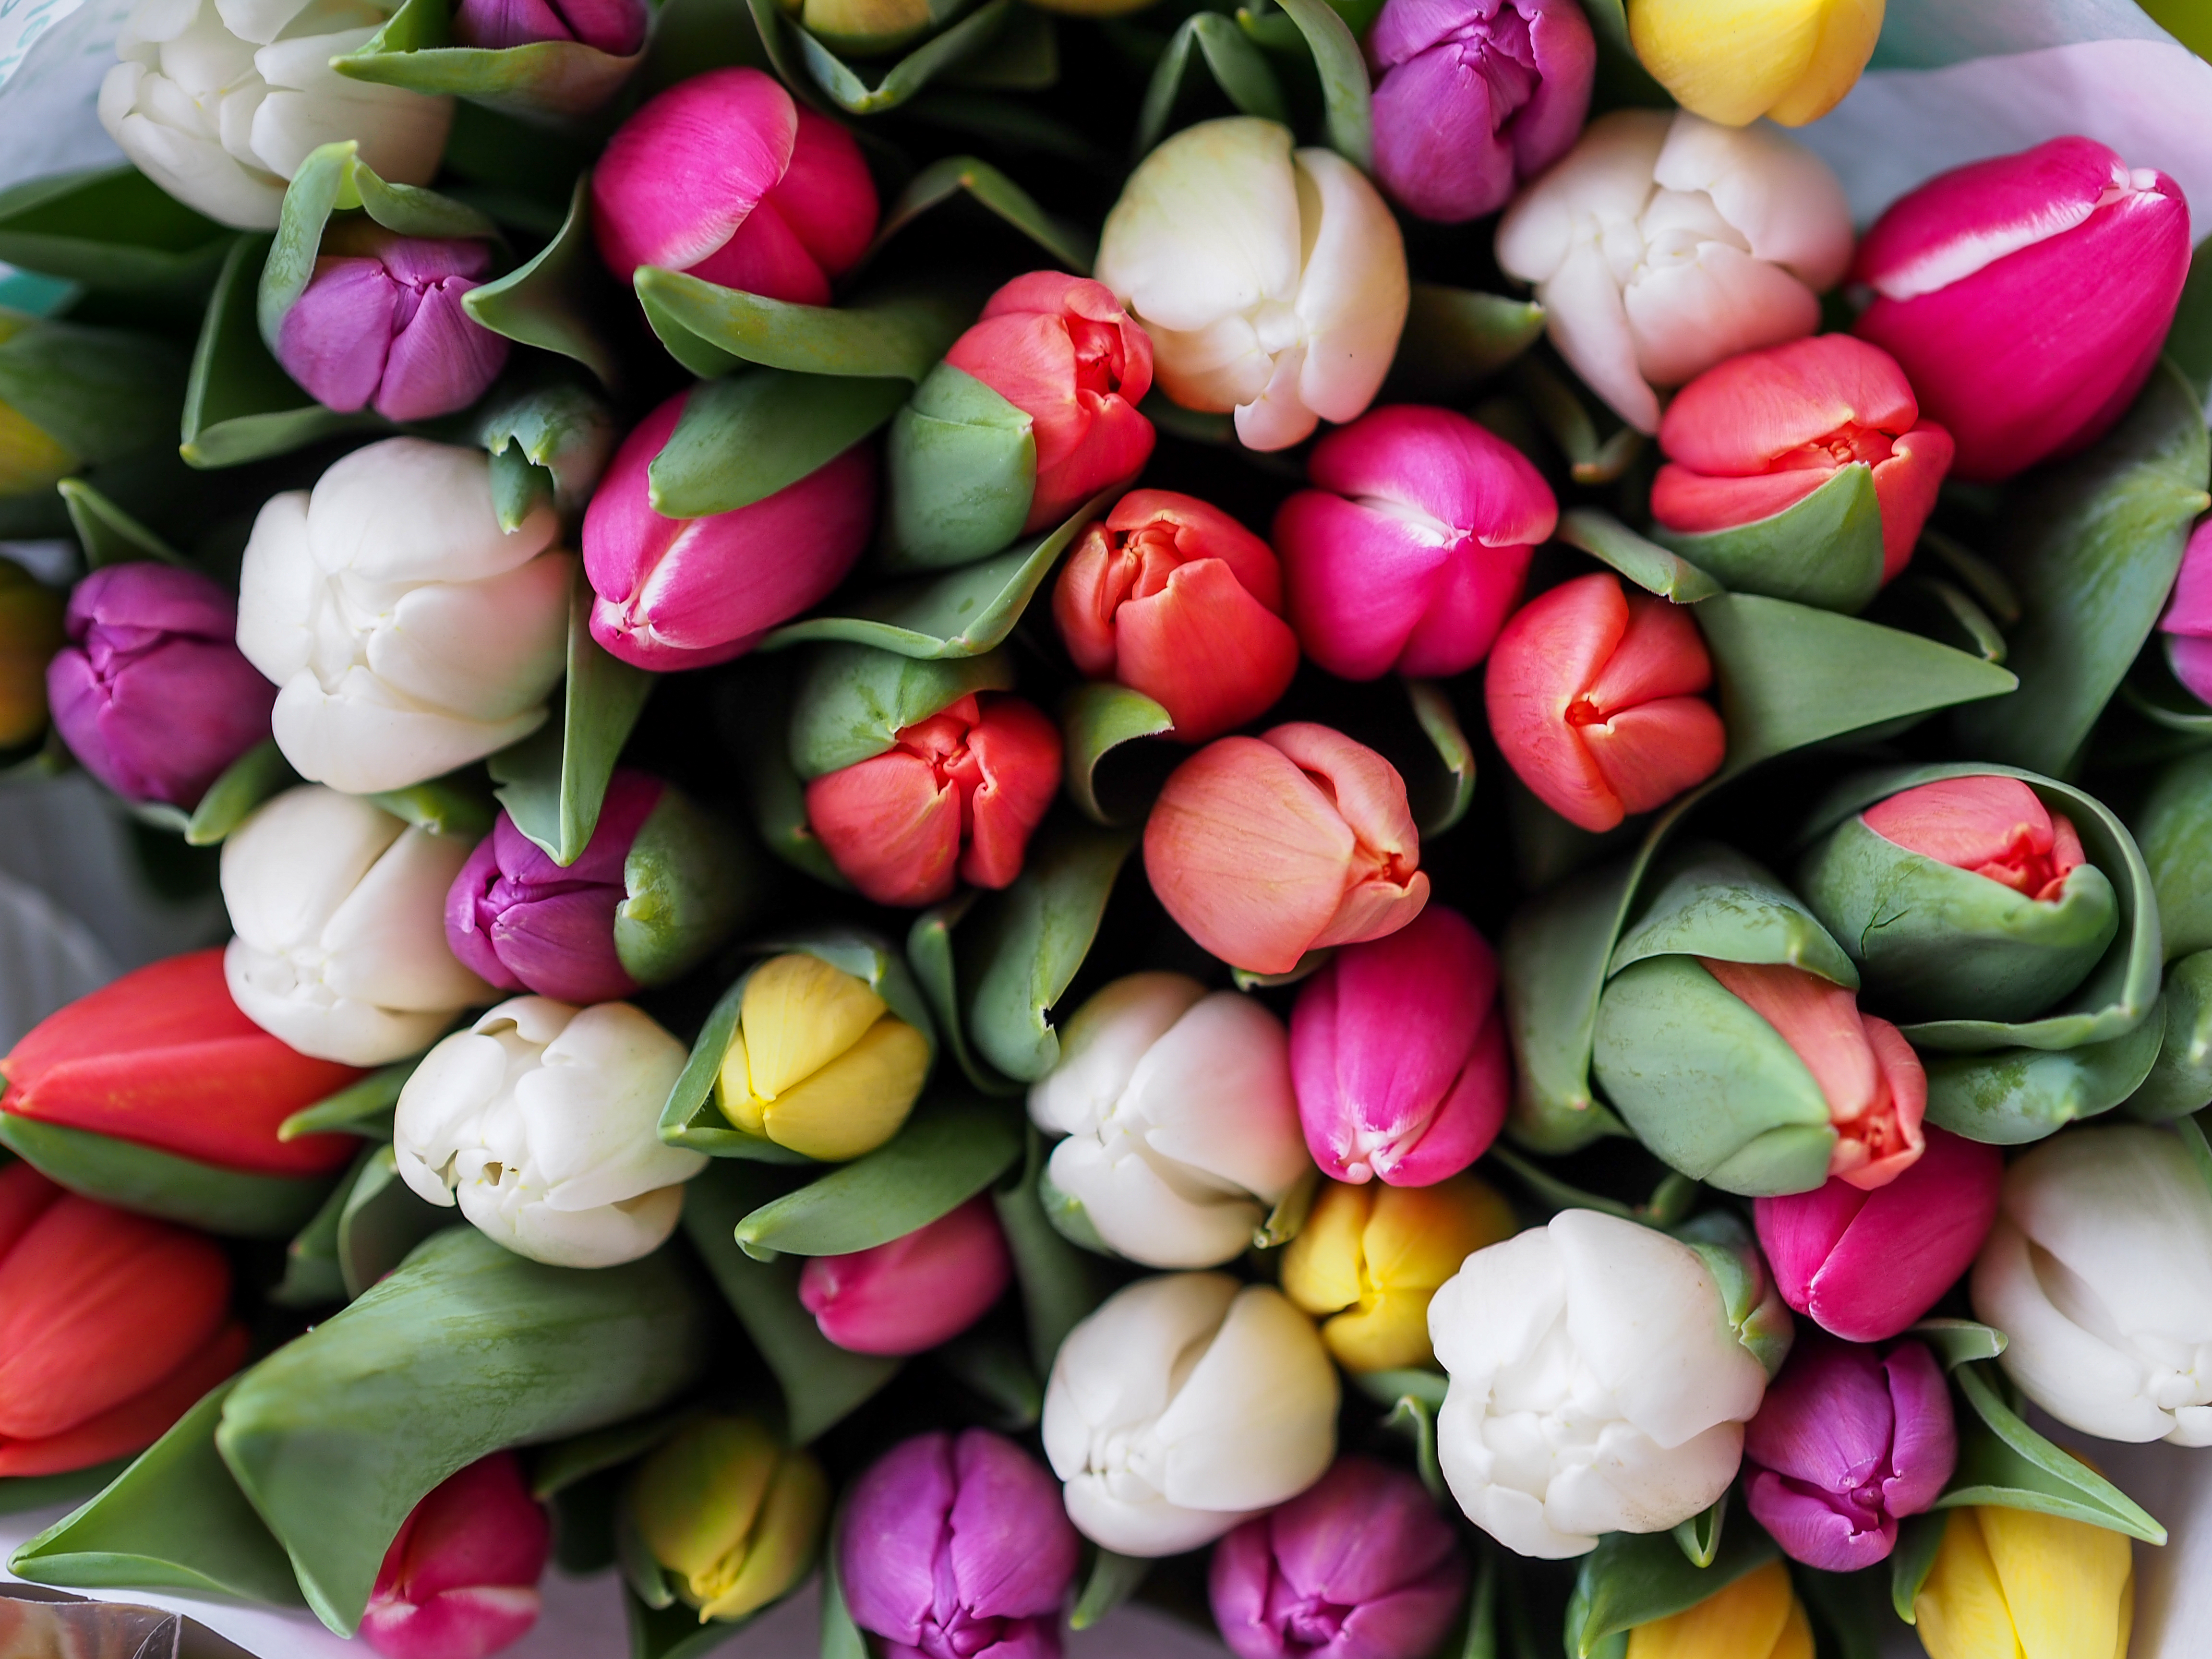 Tulips Bouquet Flowers